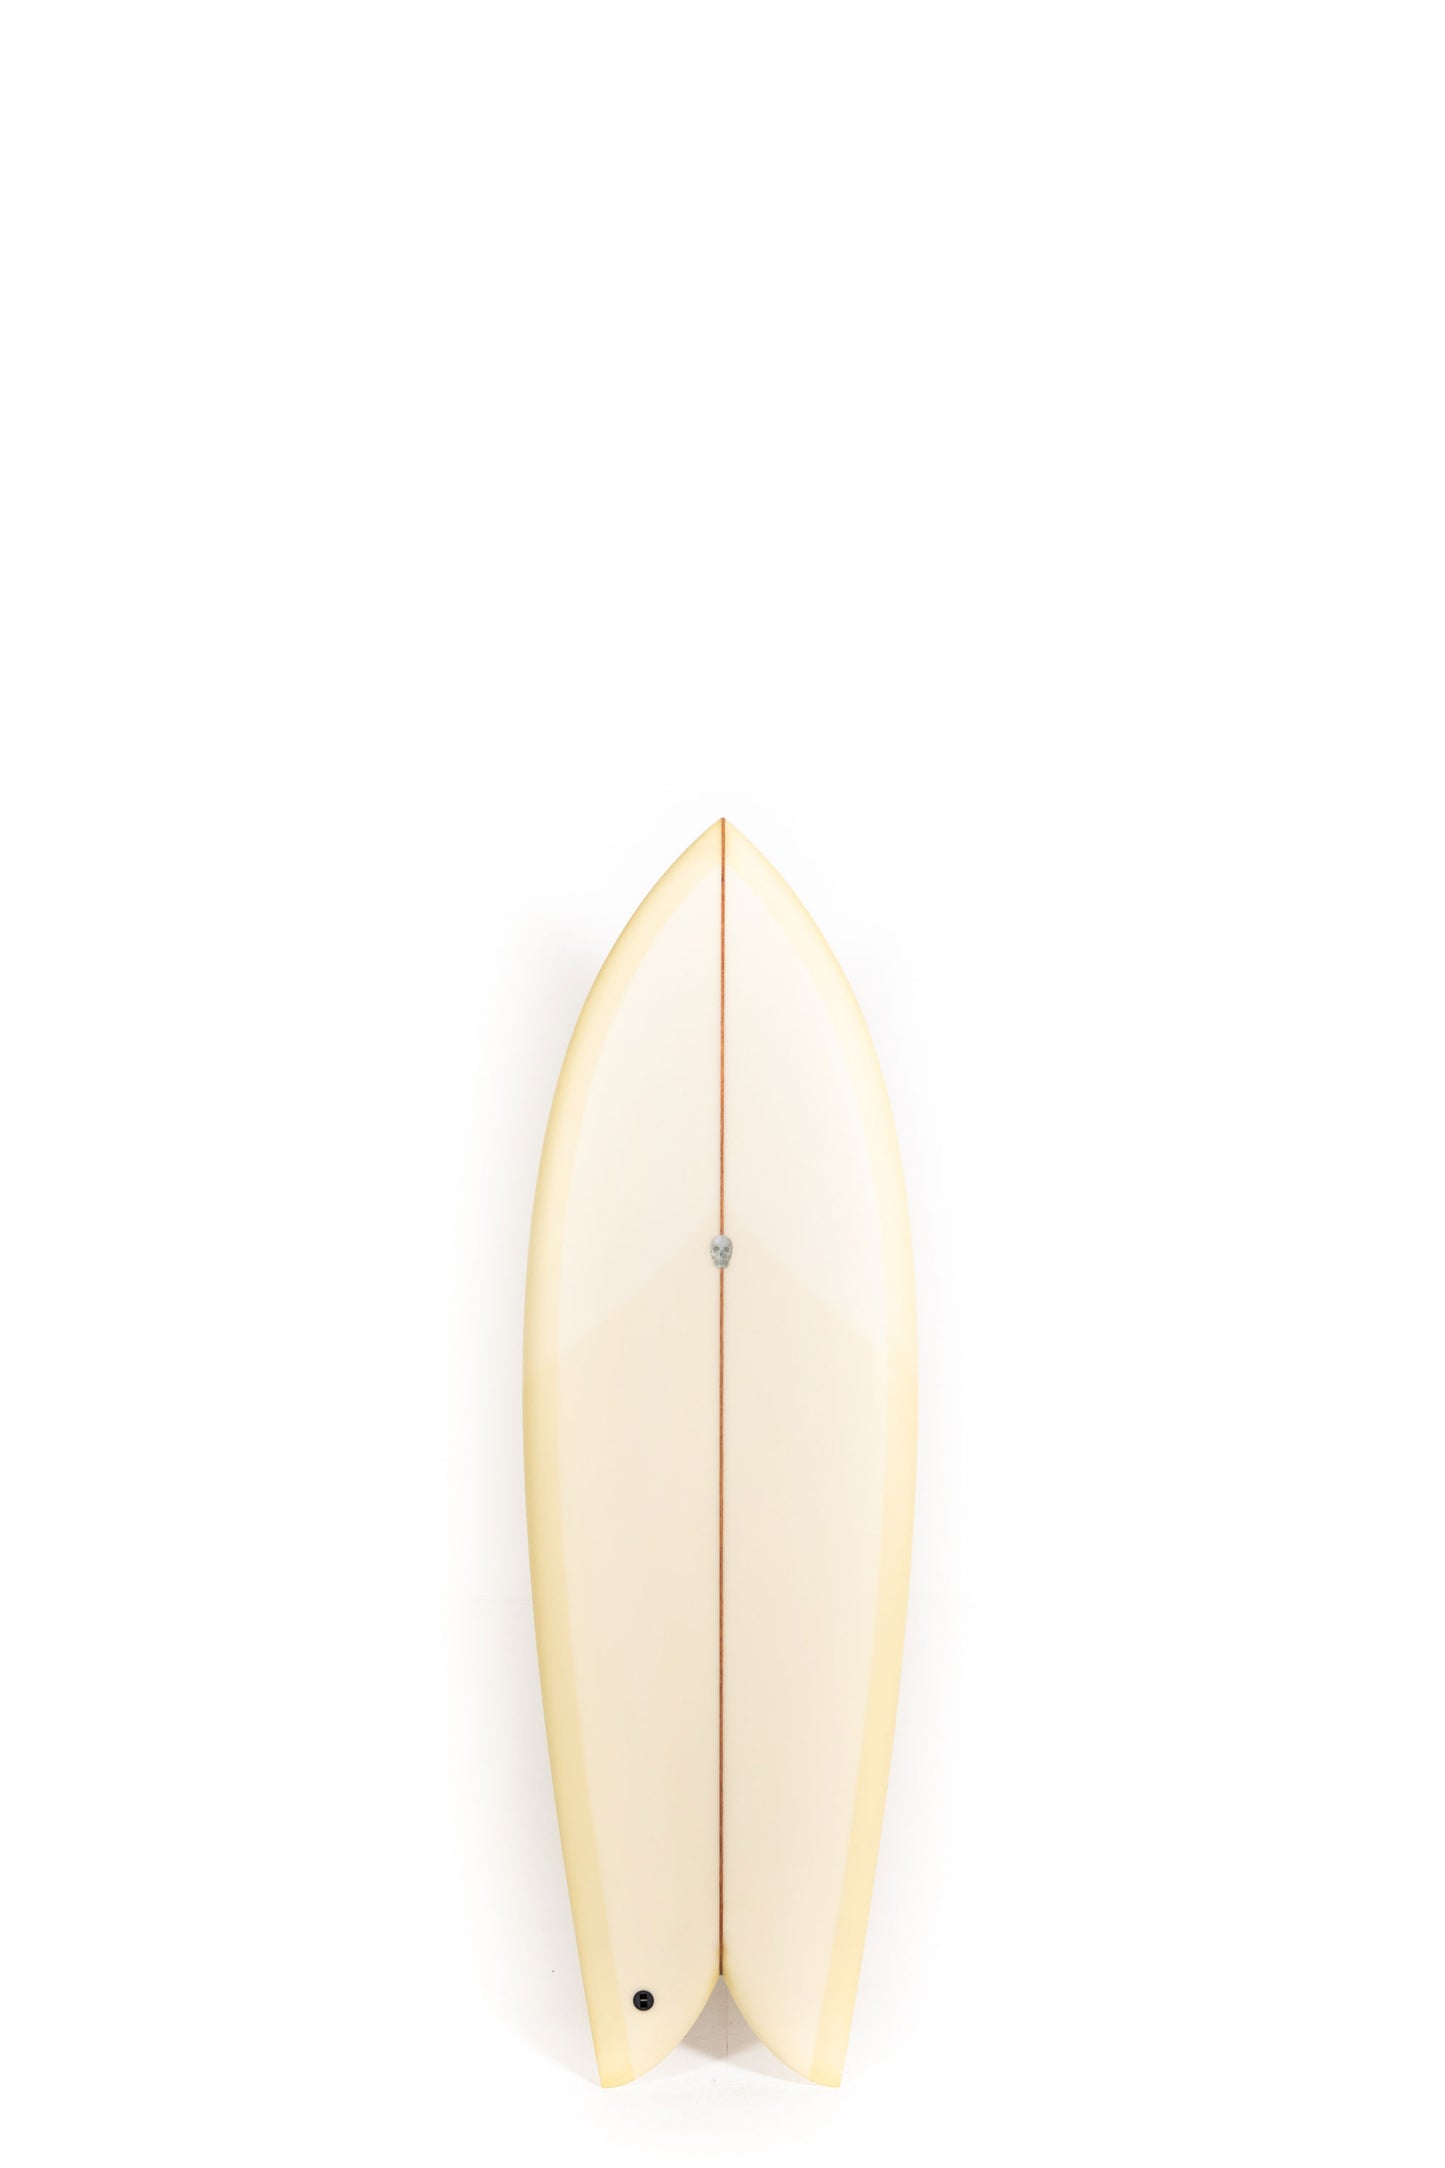 Pukas-Surf-Shop-Christenson-Surfboards-Chris-Fish-Chris-Christenson-5_6